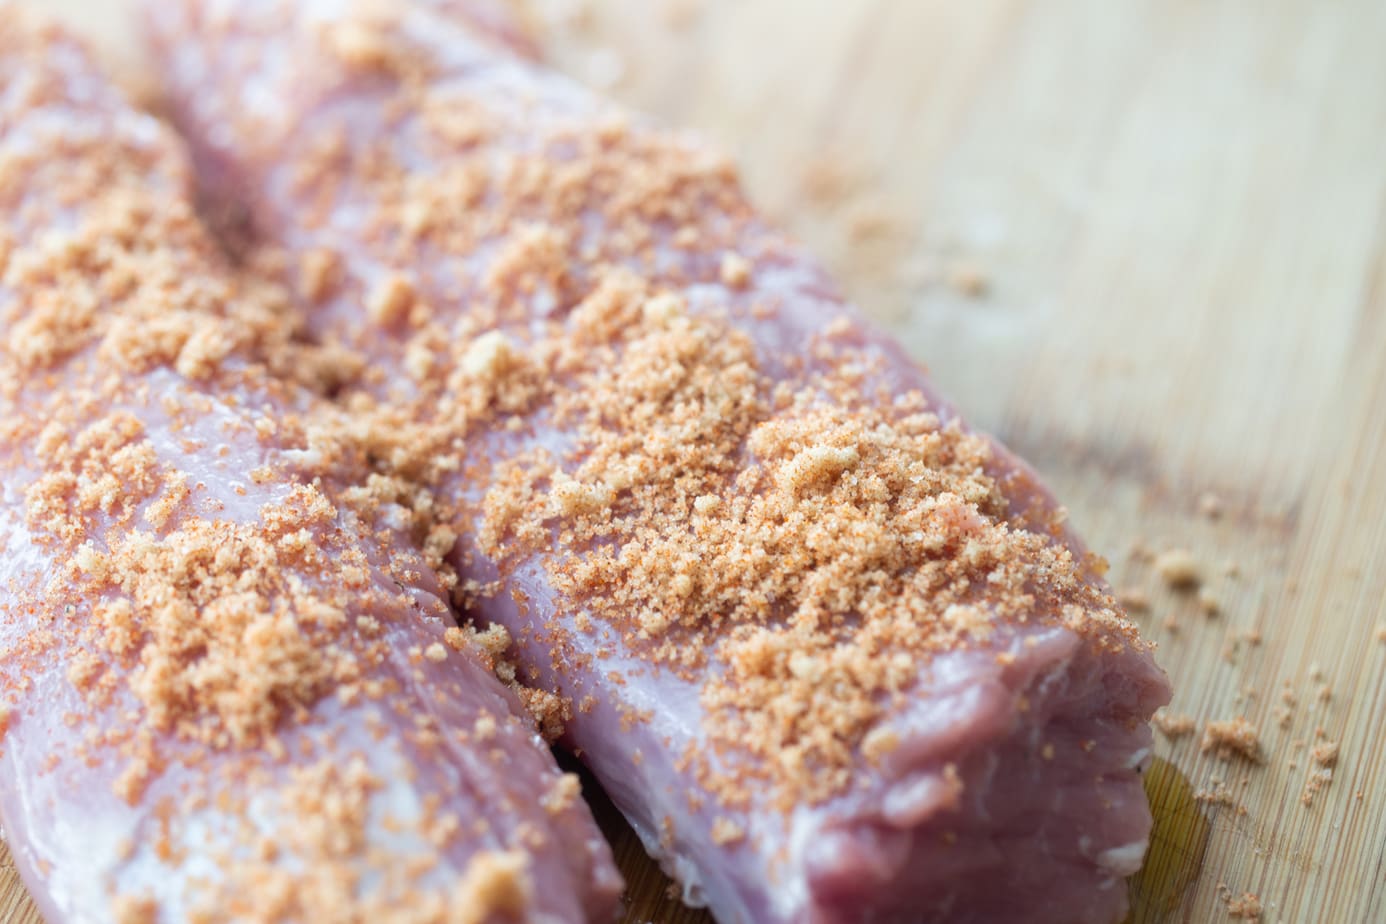 Raw pork tenderloin with spice blend on top. 